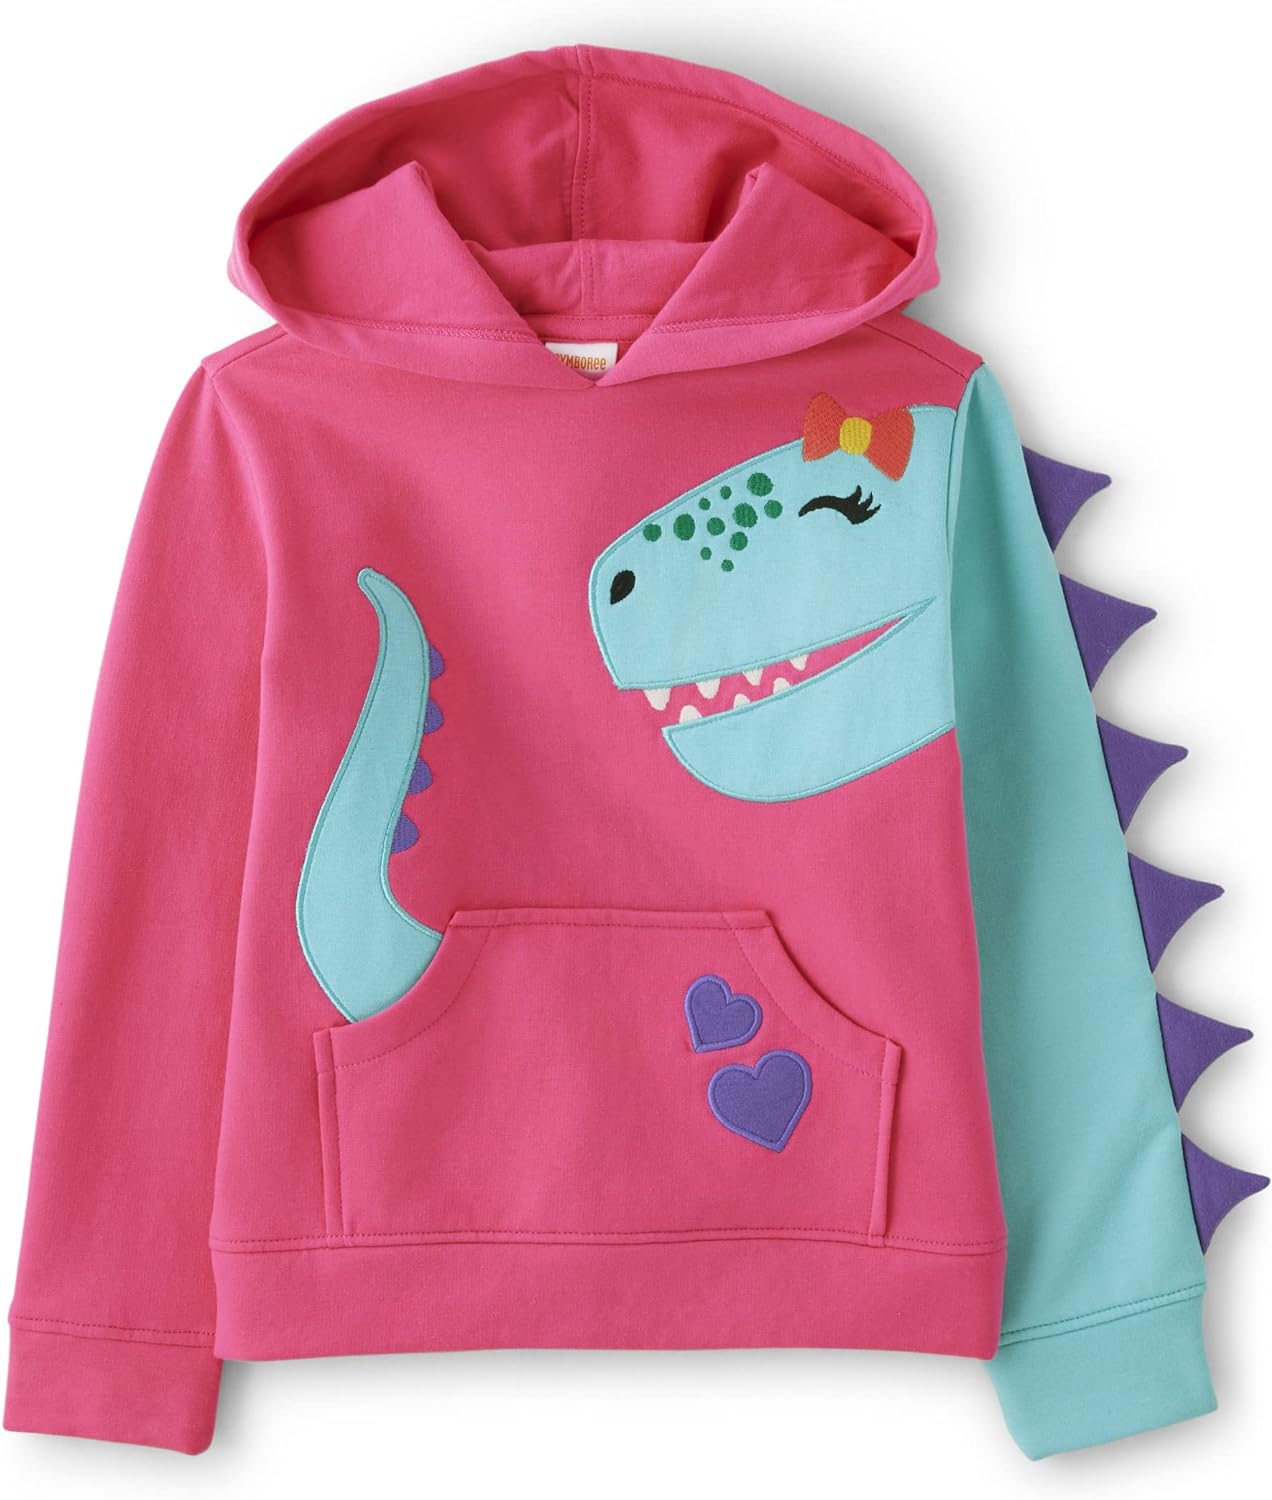 Gymboree Girls And Toddler Long Sleeve Zip Up Hoodie Sweatshirt